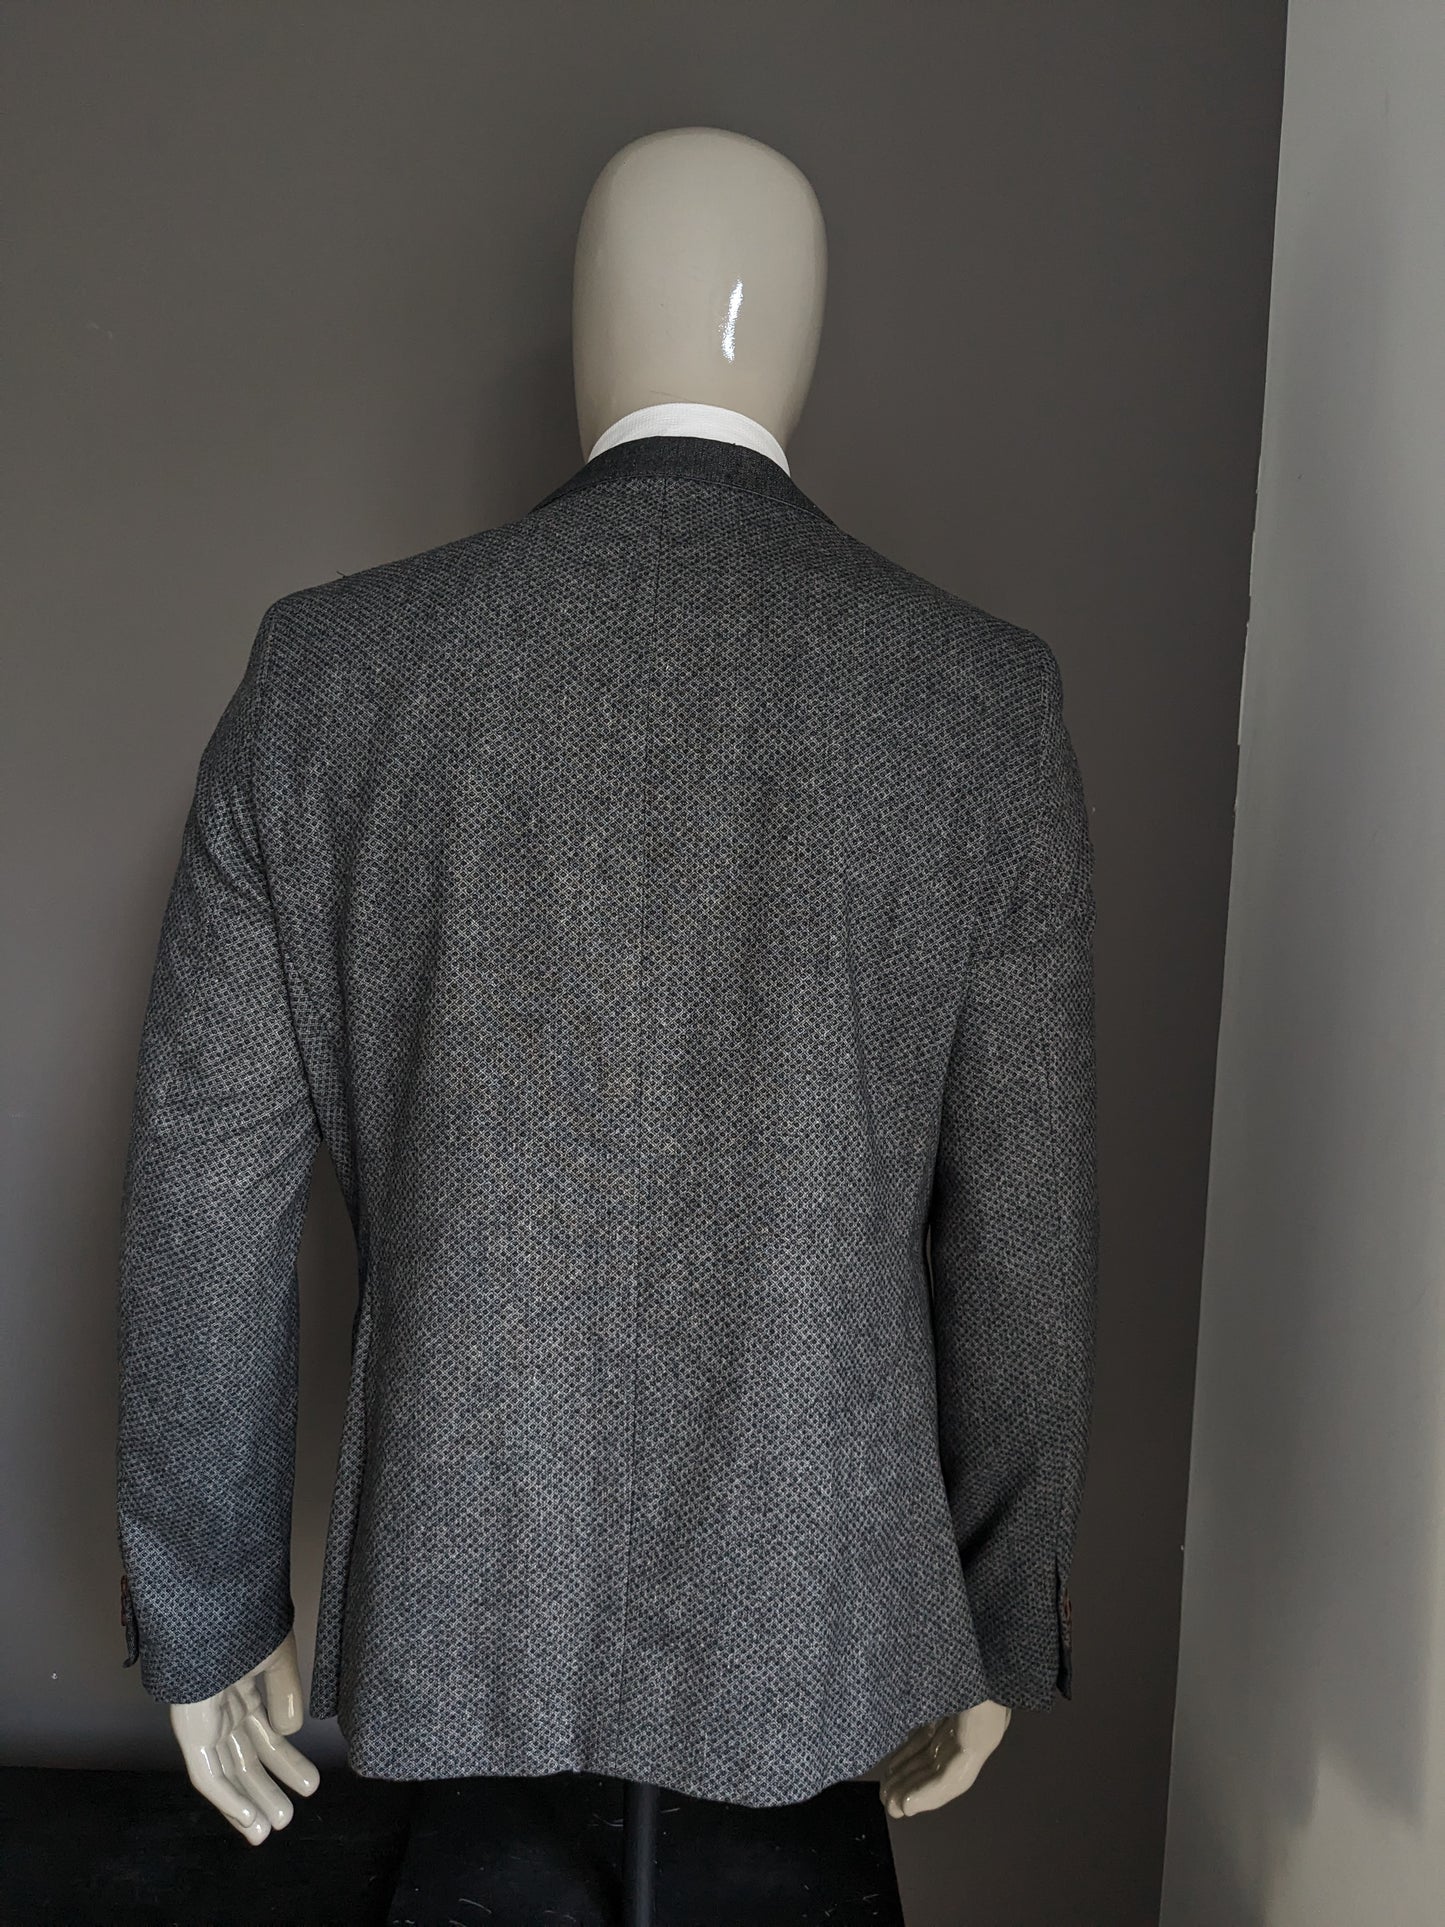 Triggers & tailor woolen jacket. Gray motif. Size 54 / L. 50% Wool.